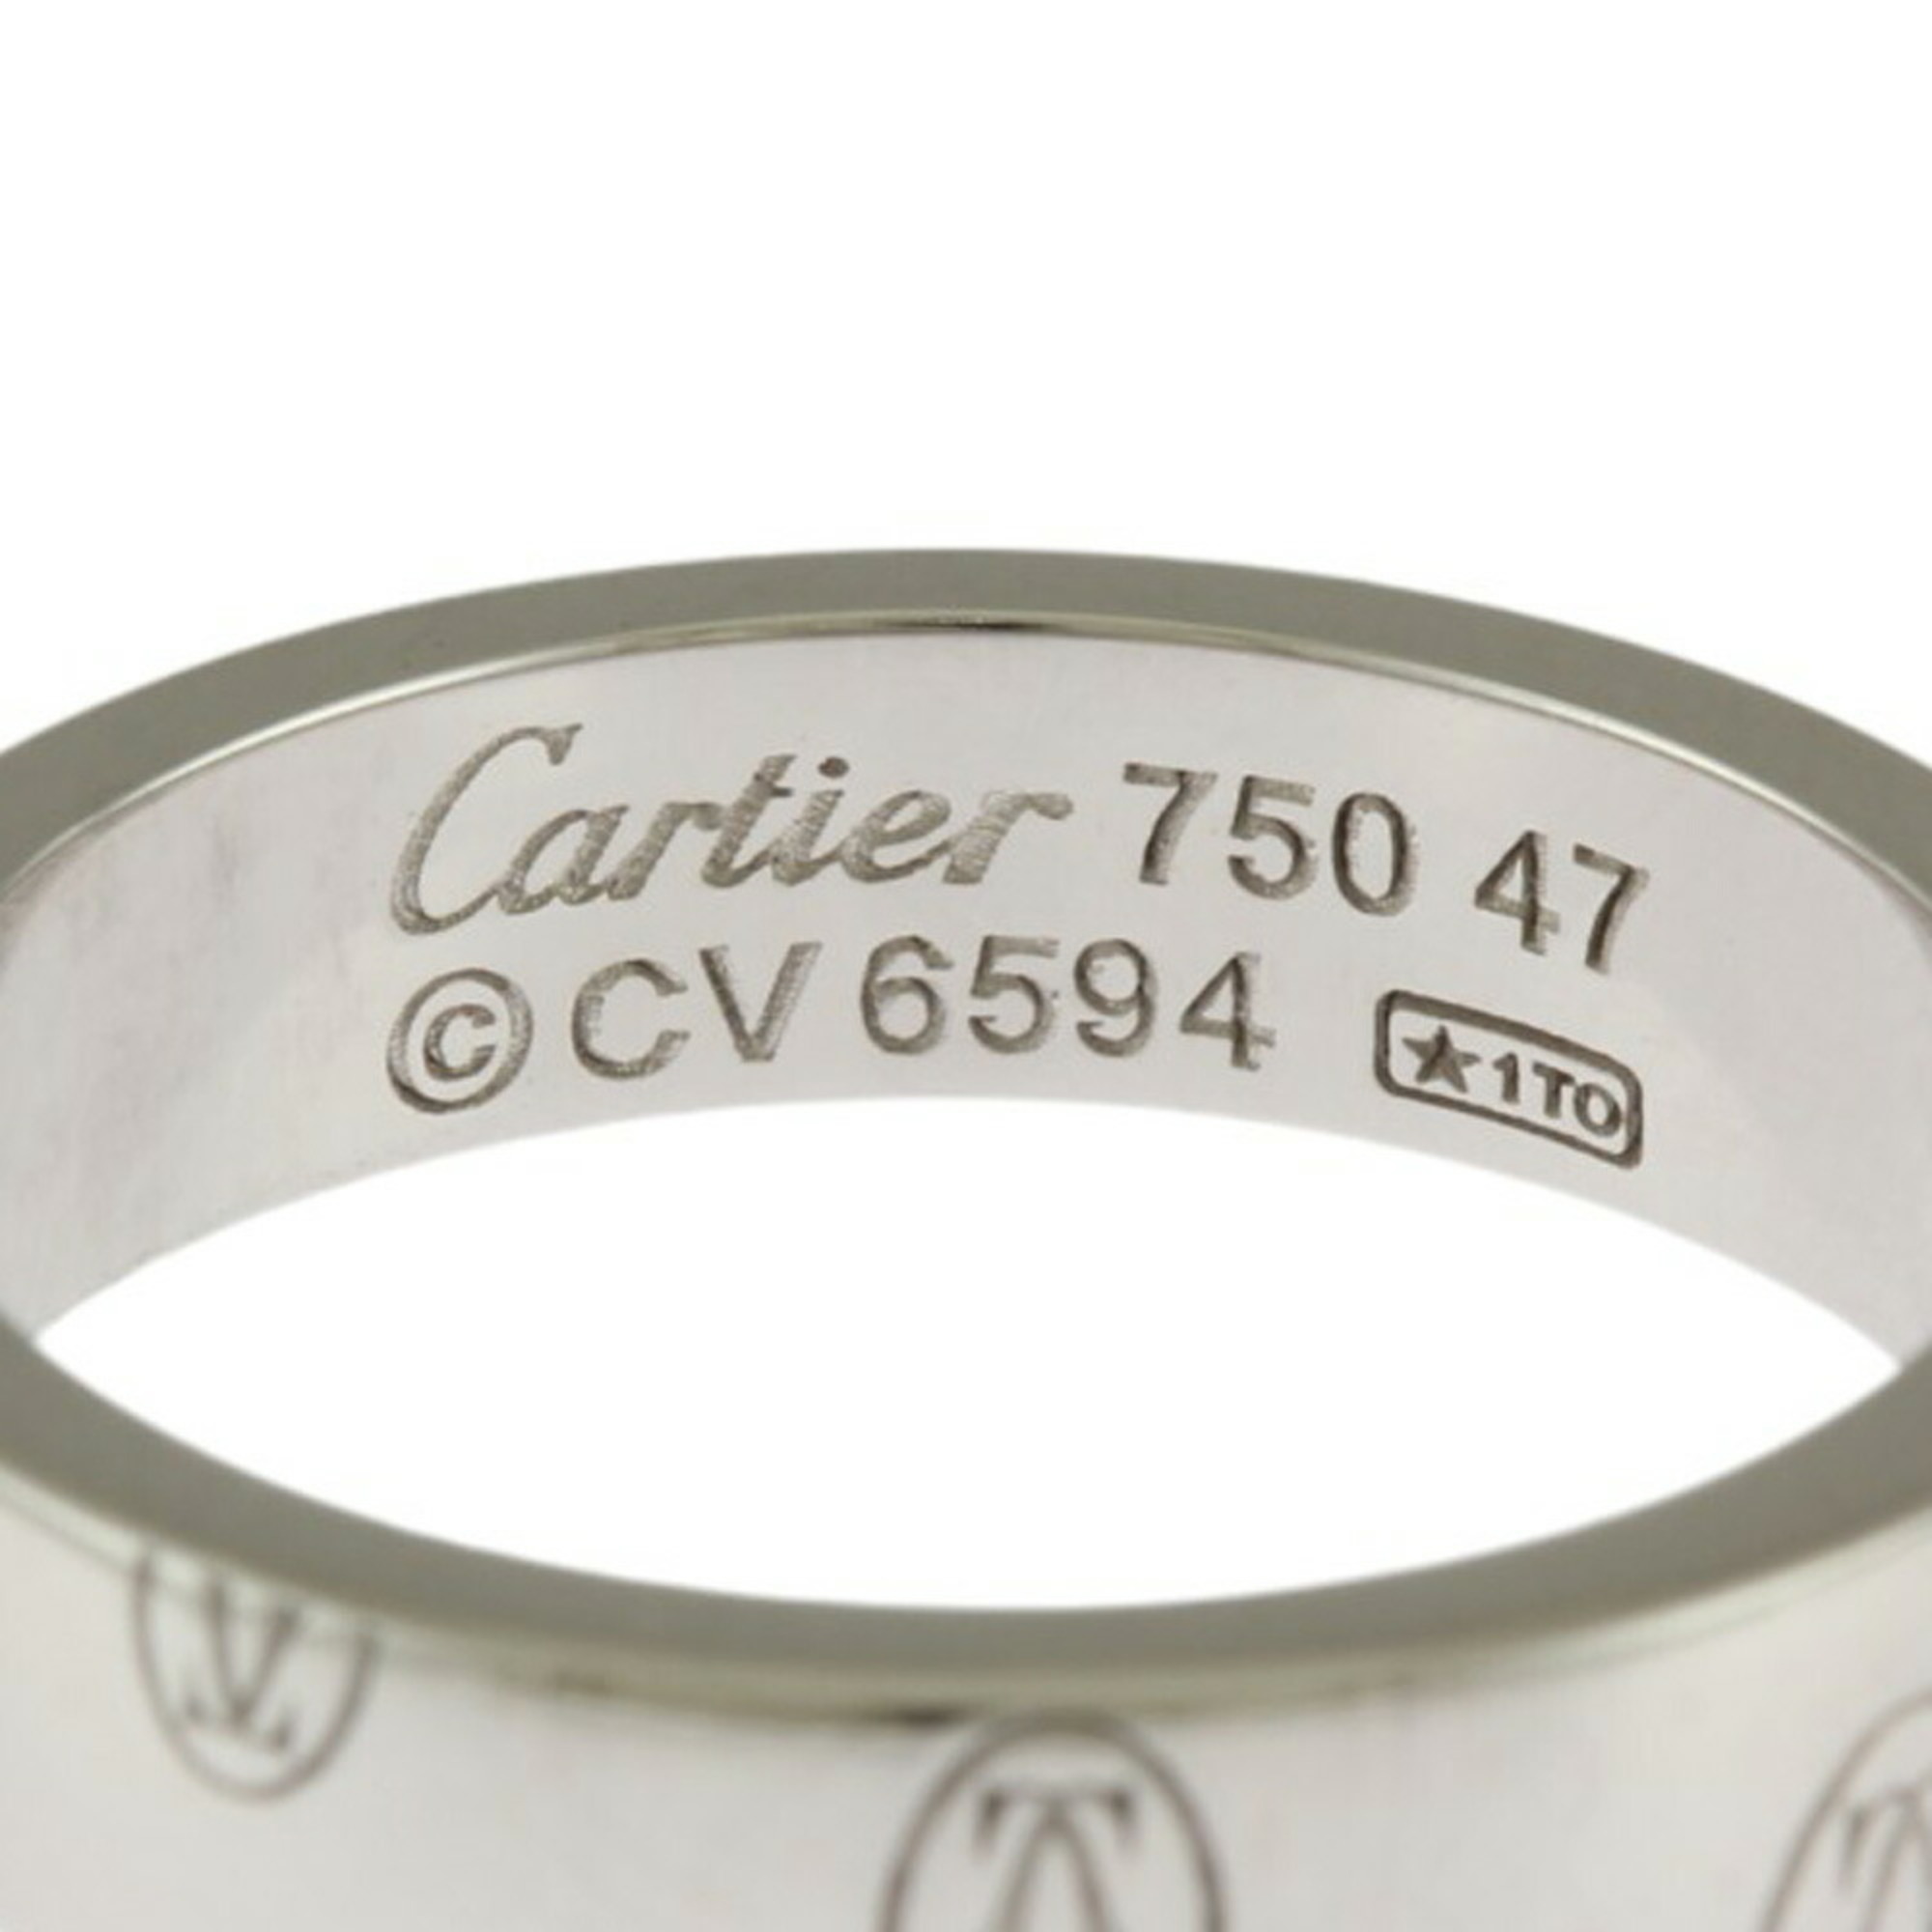 Cartier Happy Birthday Ring, Size 7, 18k, Women's, CARTIER